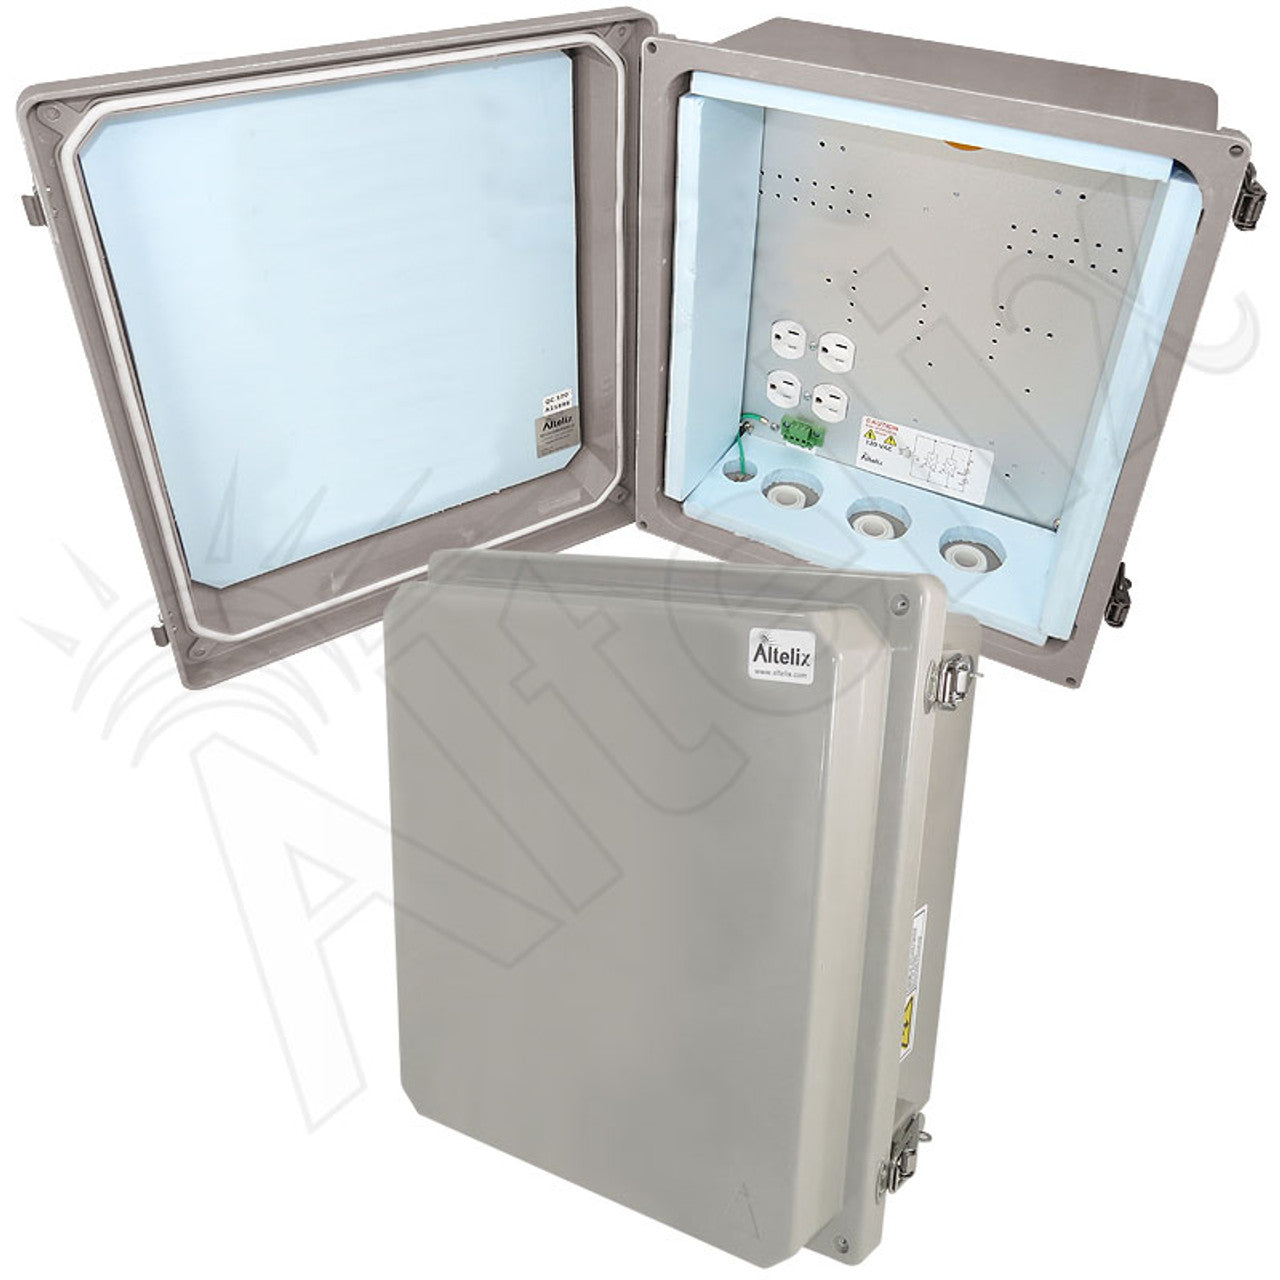 Altelix Insulated Fiberglass Weatherproof NEMA 4X Enclosure with 200W Heater & 120 VAC Outlets-3